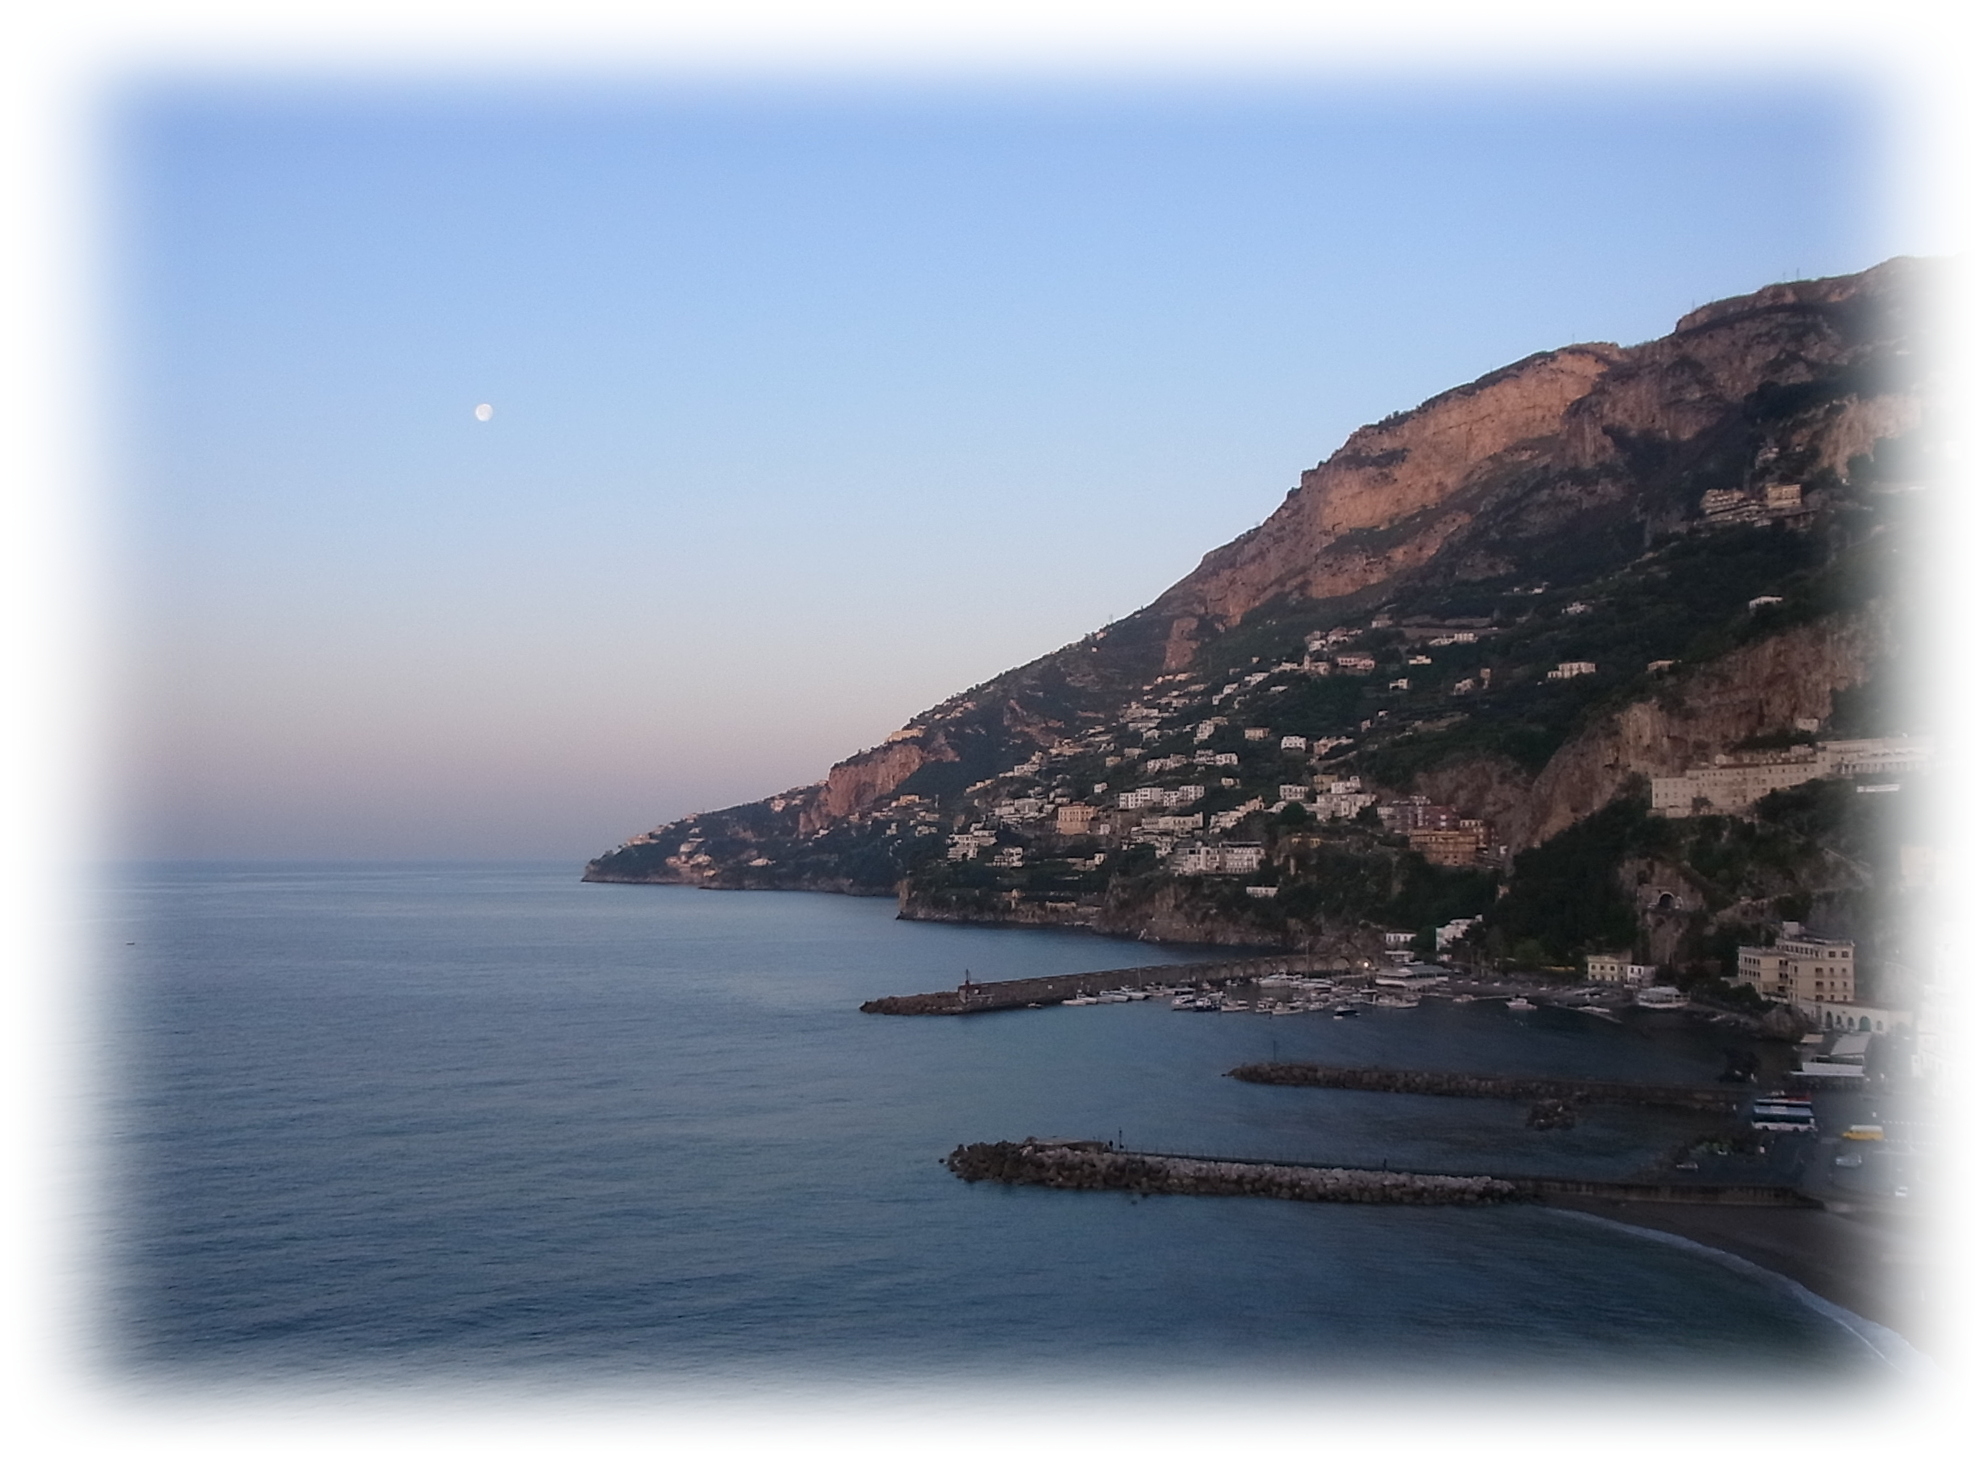 Amalfi coast at dawn seen from Hotel Luna convento